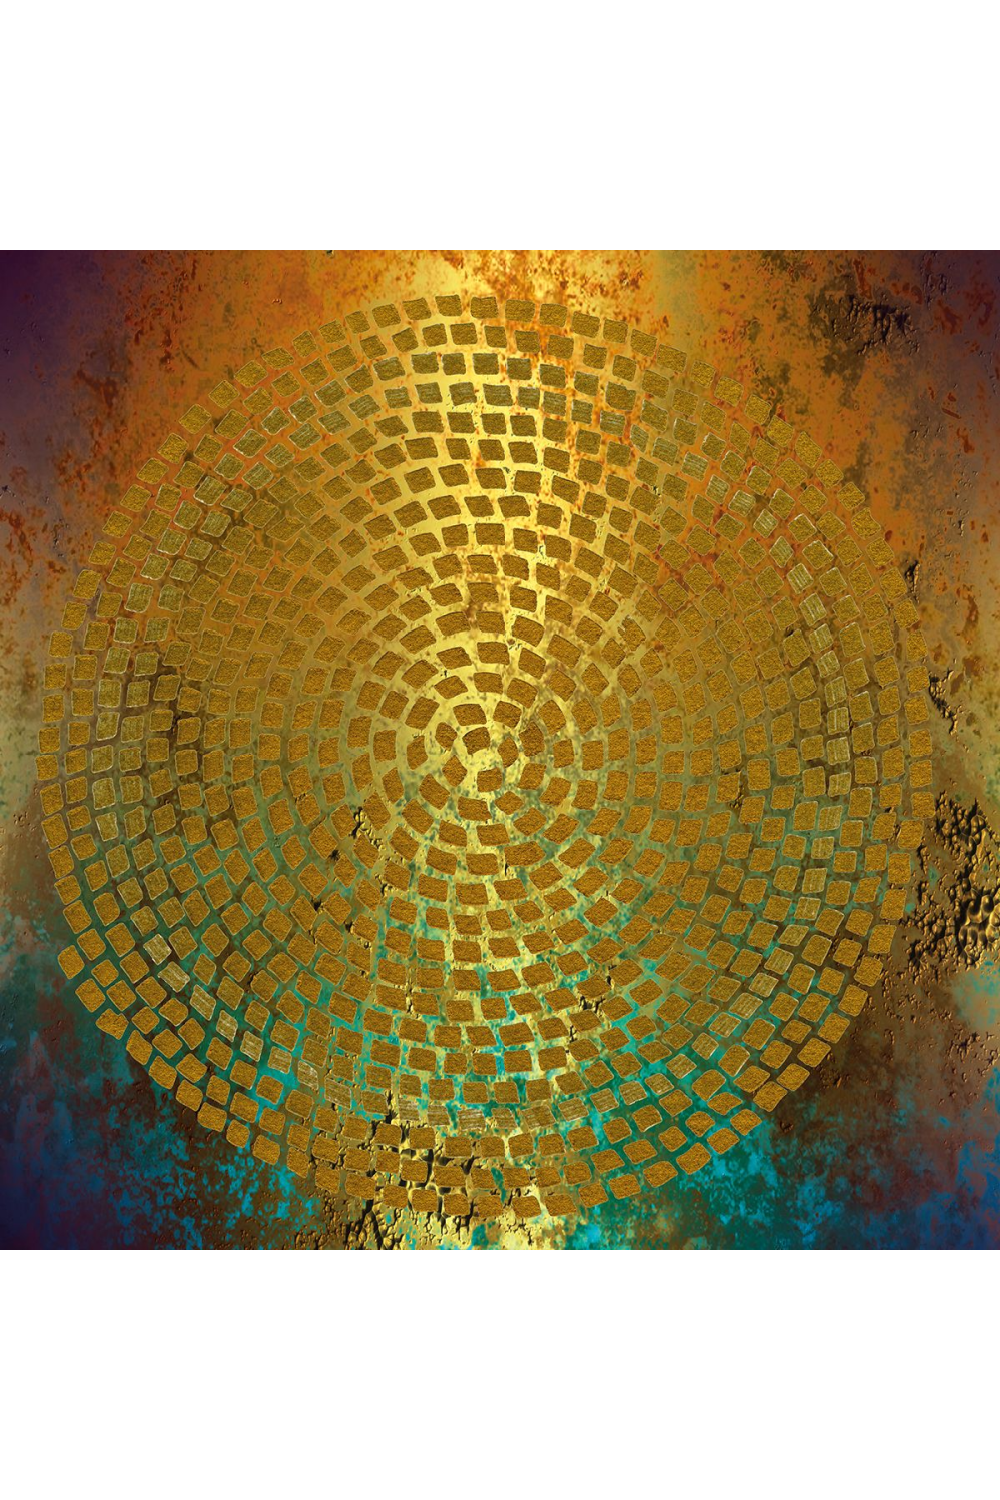 Circular Mosaic Photography Artwork | Andrew Martin Fourth Dimension | Oroa.com